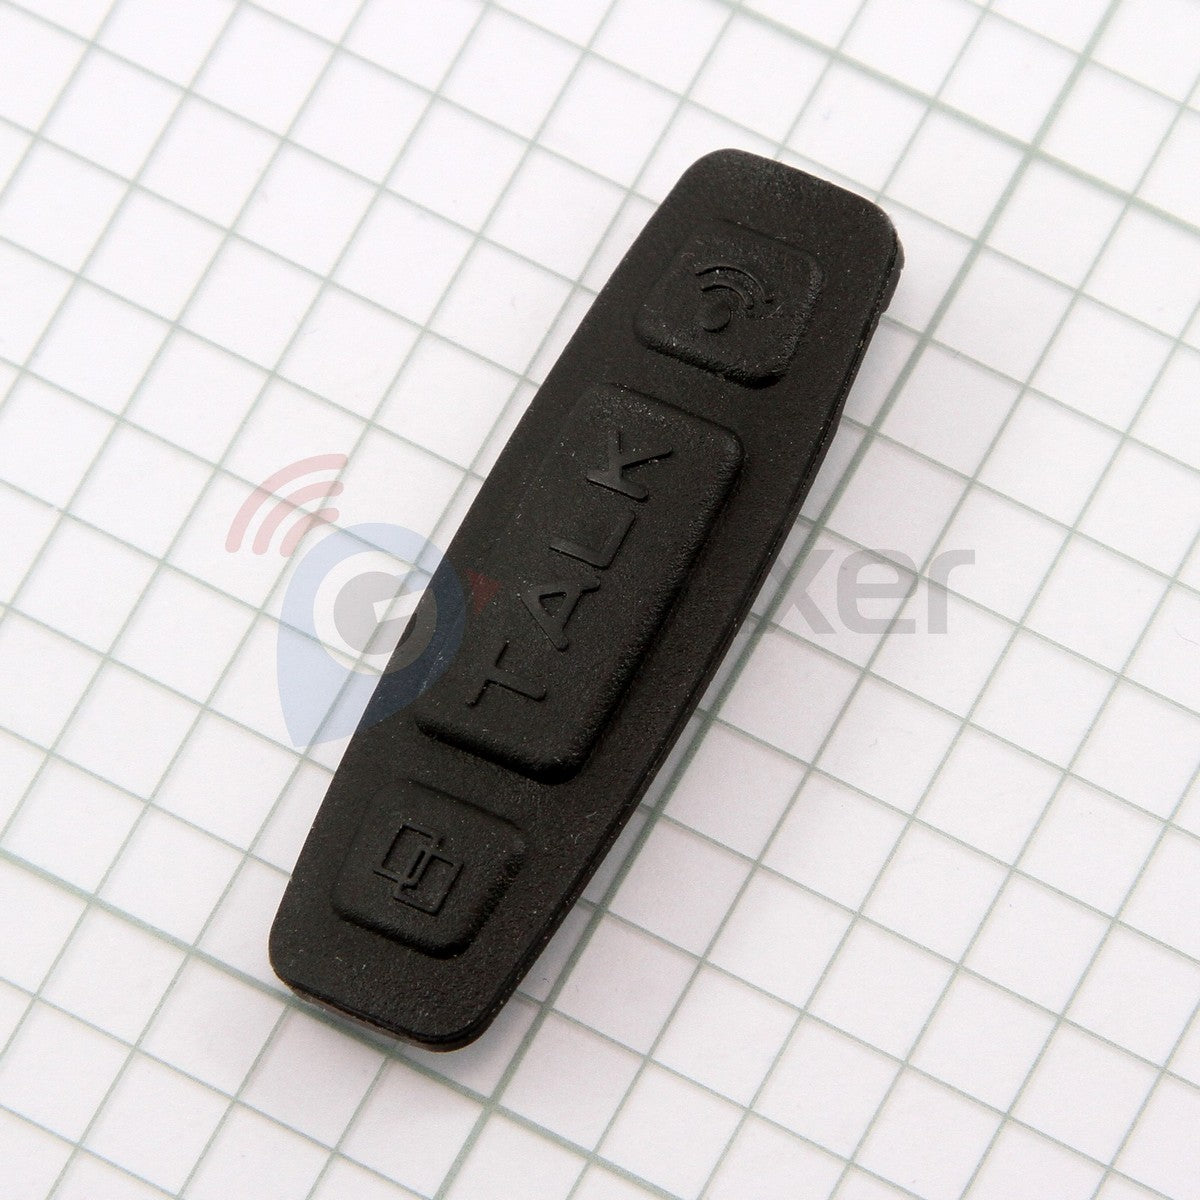 New Rubber button TALK for Garmin Rino 520, 530, 520HCx, 530HCx  repair part